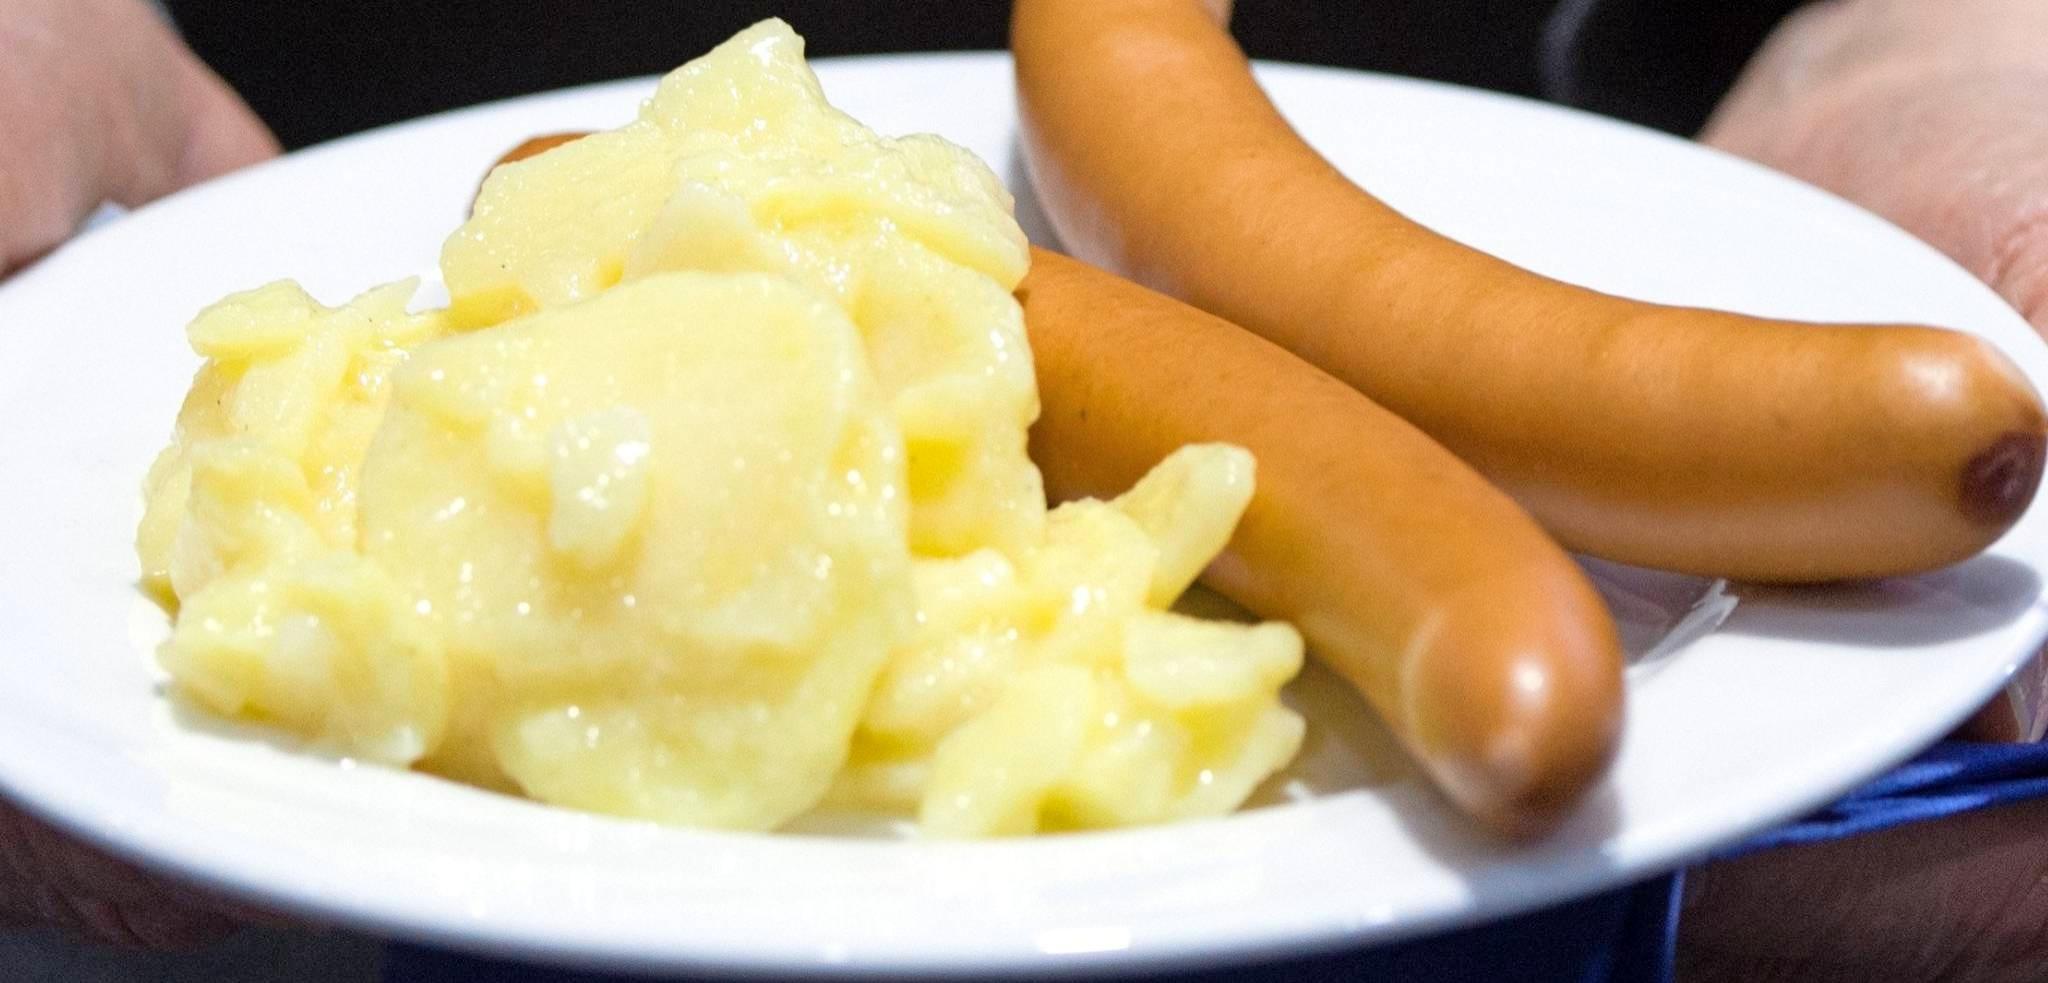 Bescheidenes Mahl an Heiligabend: Würstle mit Kartoffelsalat. Foto: dpa